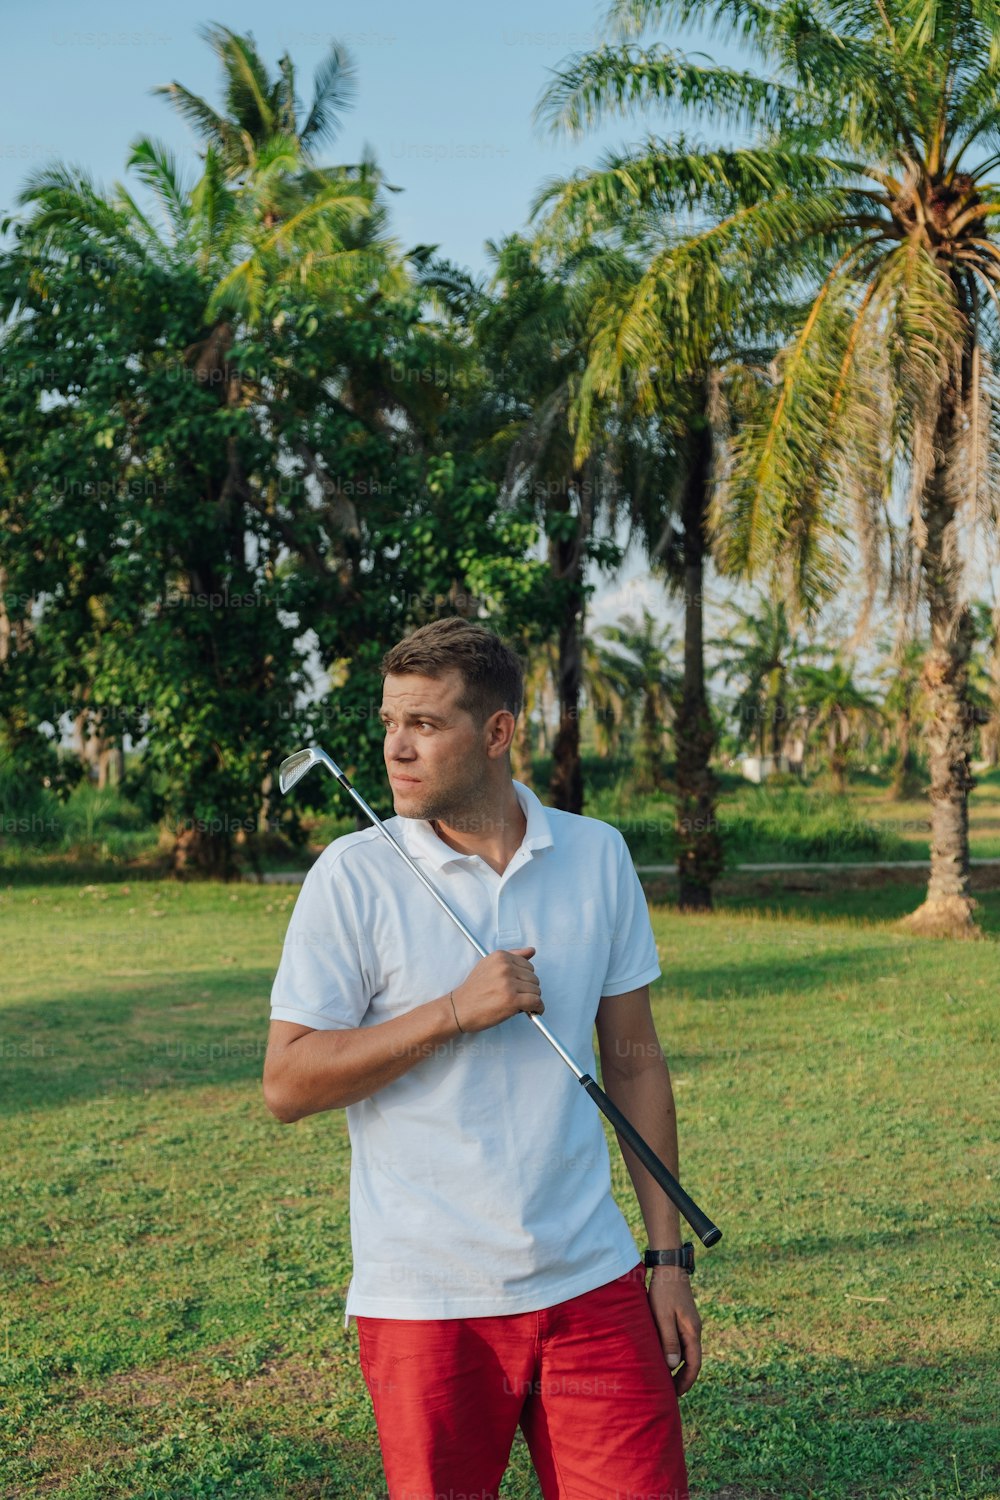 a man holding a golf club in a field